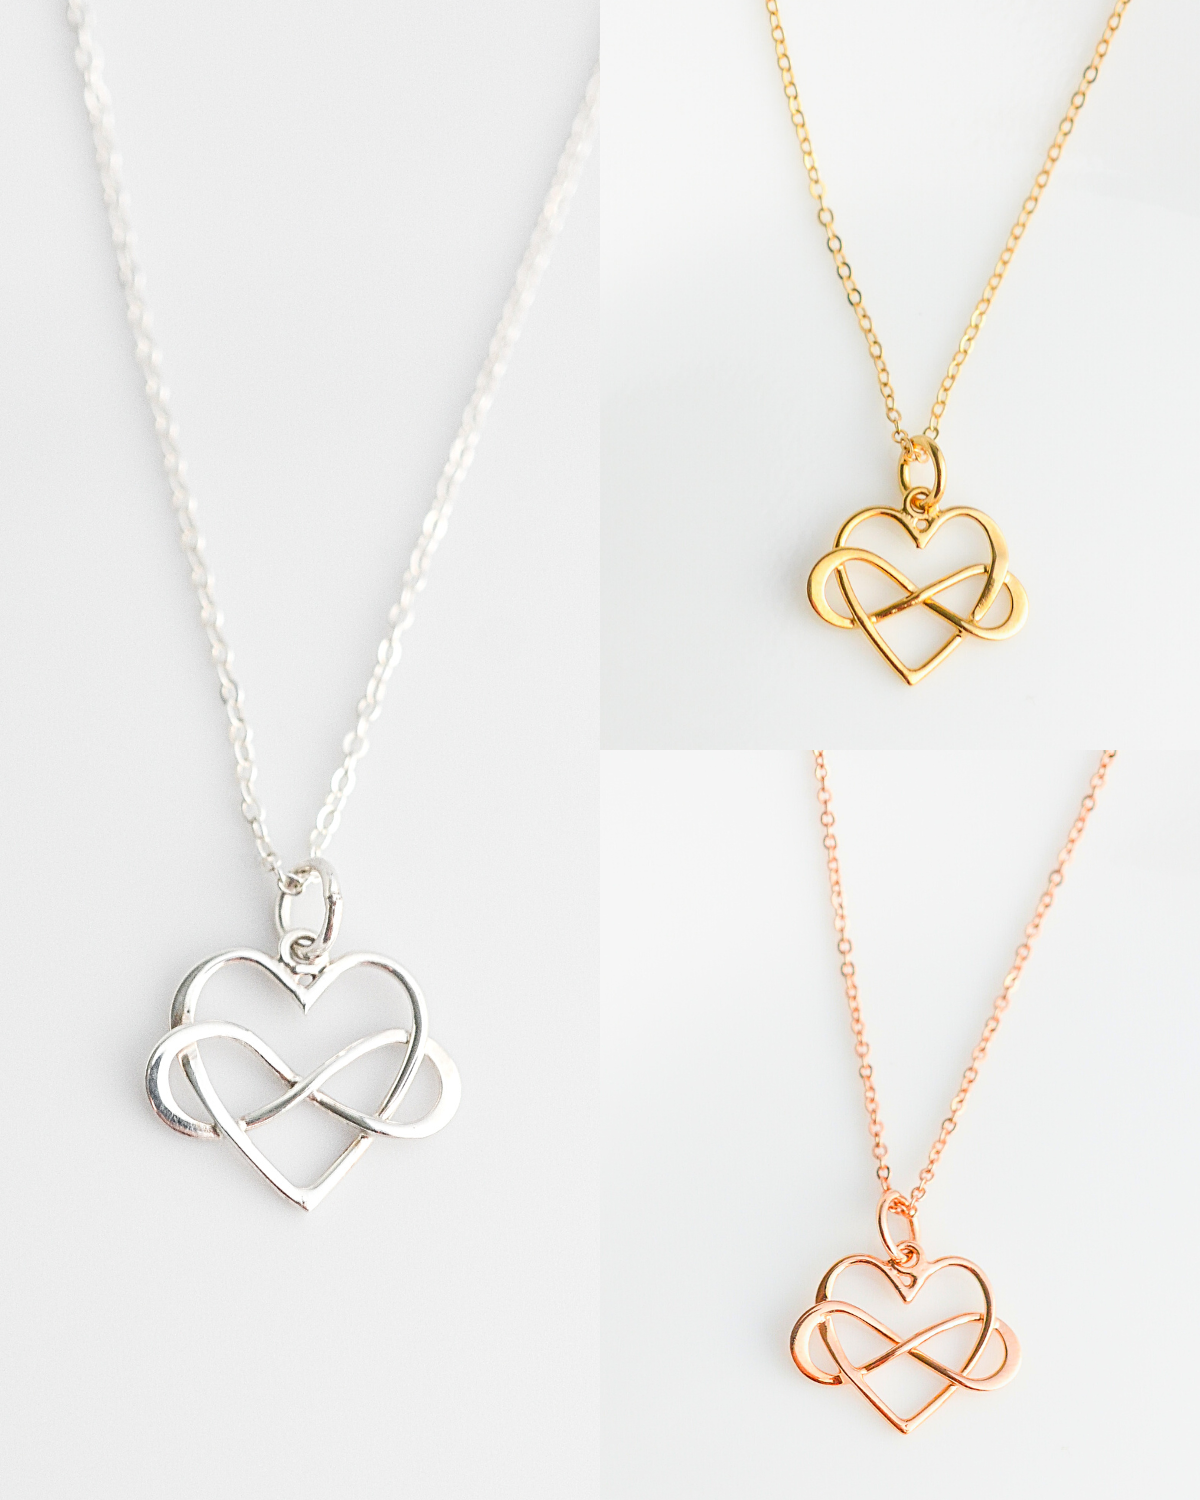 0.90Ct Cubic Zirconia Heart Shape Infinity Pendant Necklace 14K Rose Gold  Finish | eBay